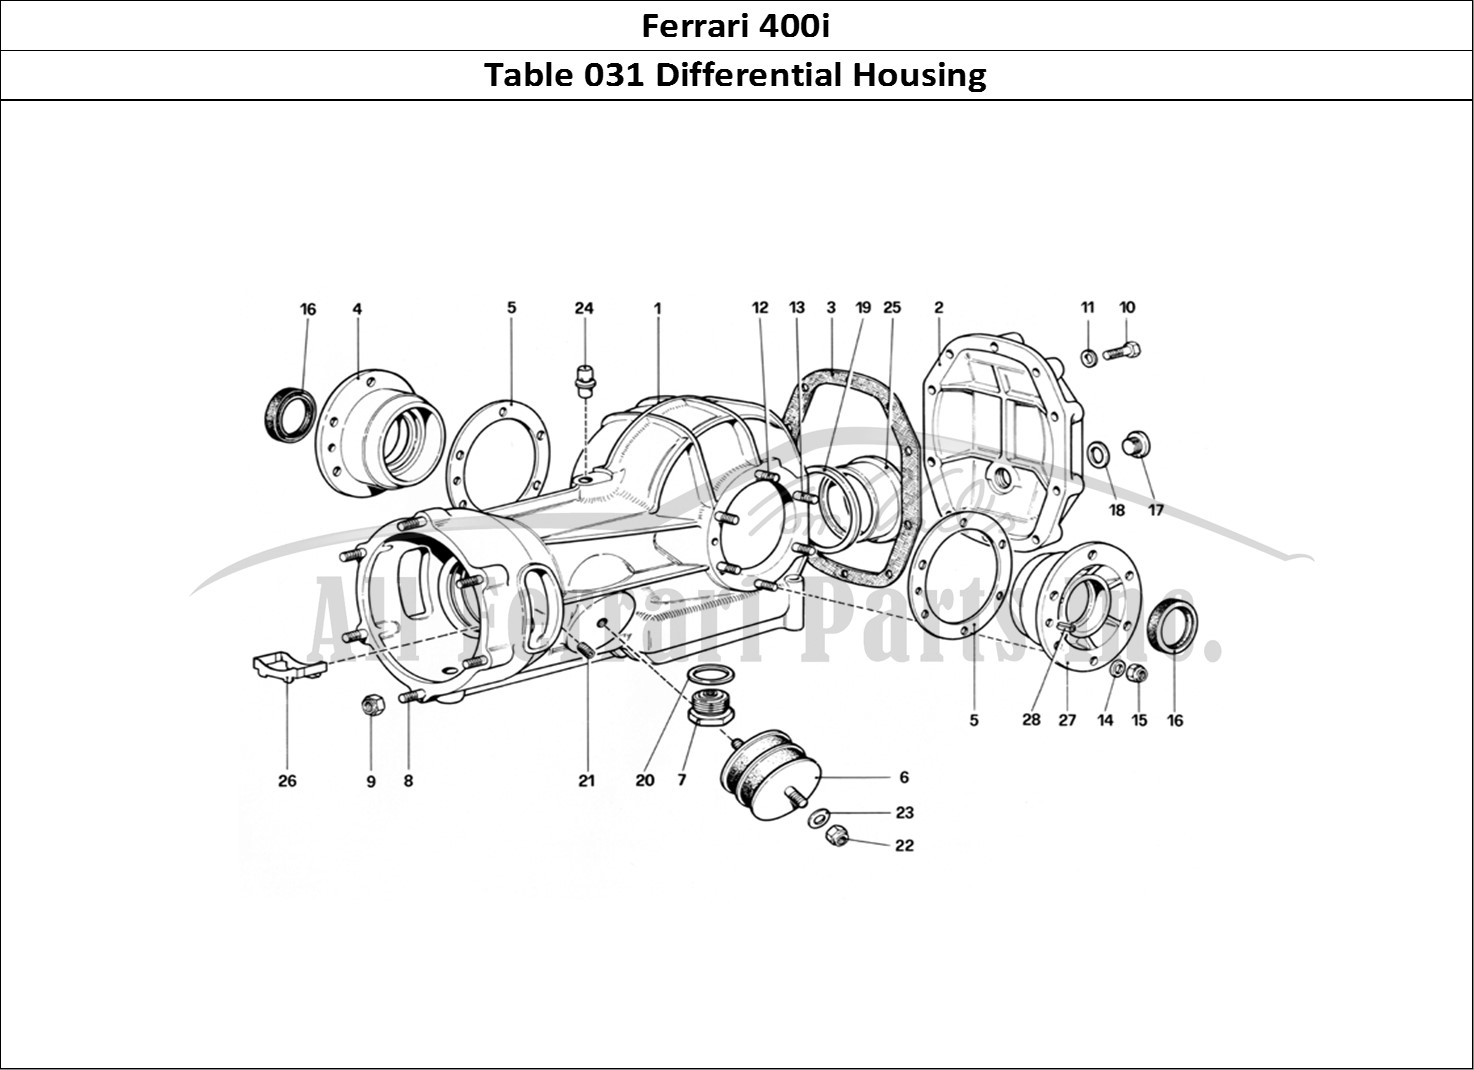 Ferrari Parts Ferrari 400i (1983 Mechanical) Page 031 Differential Housing